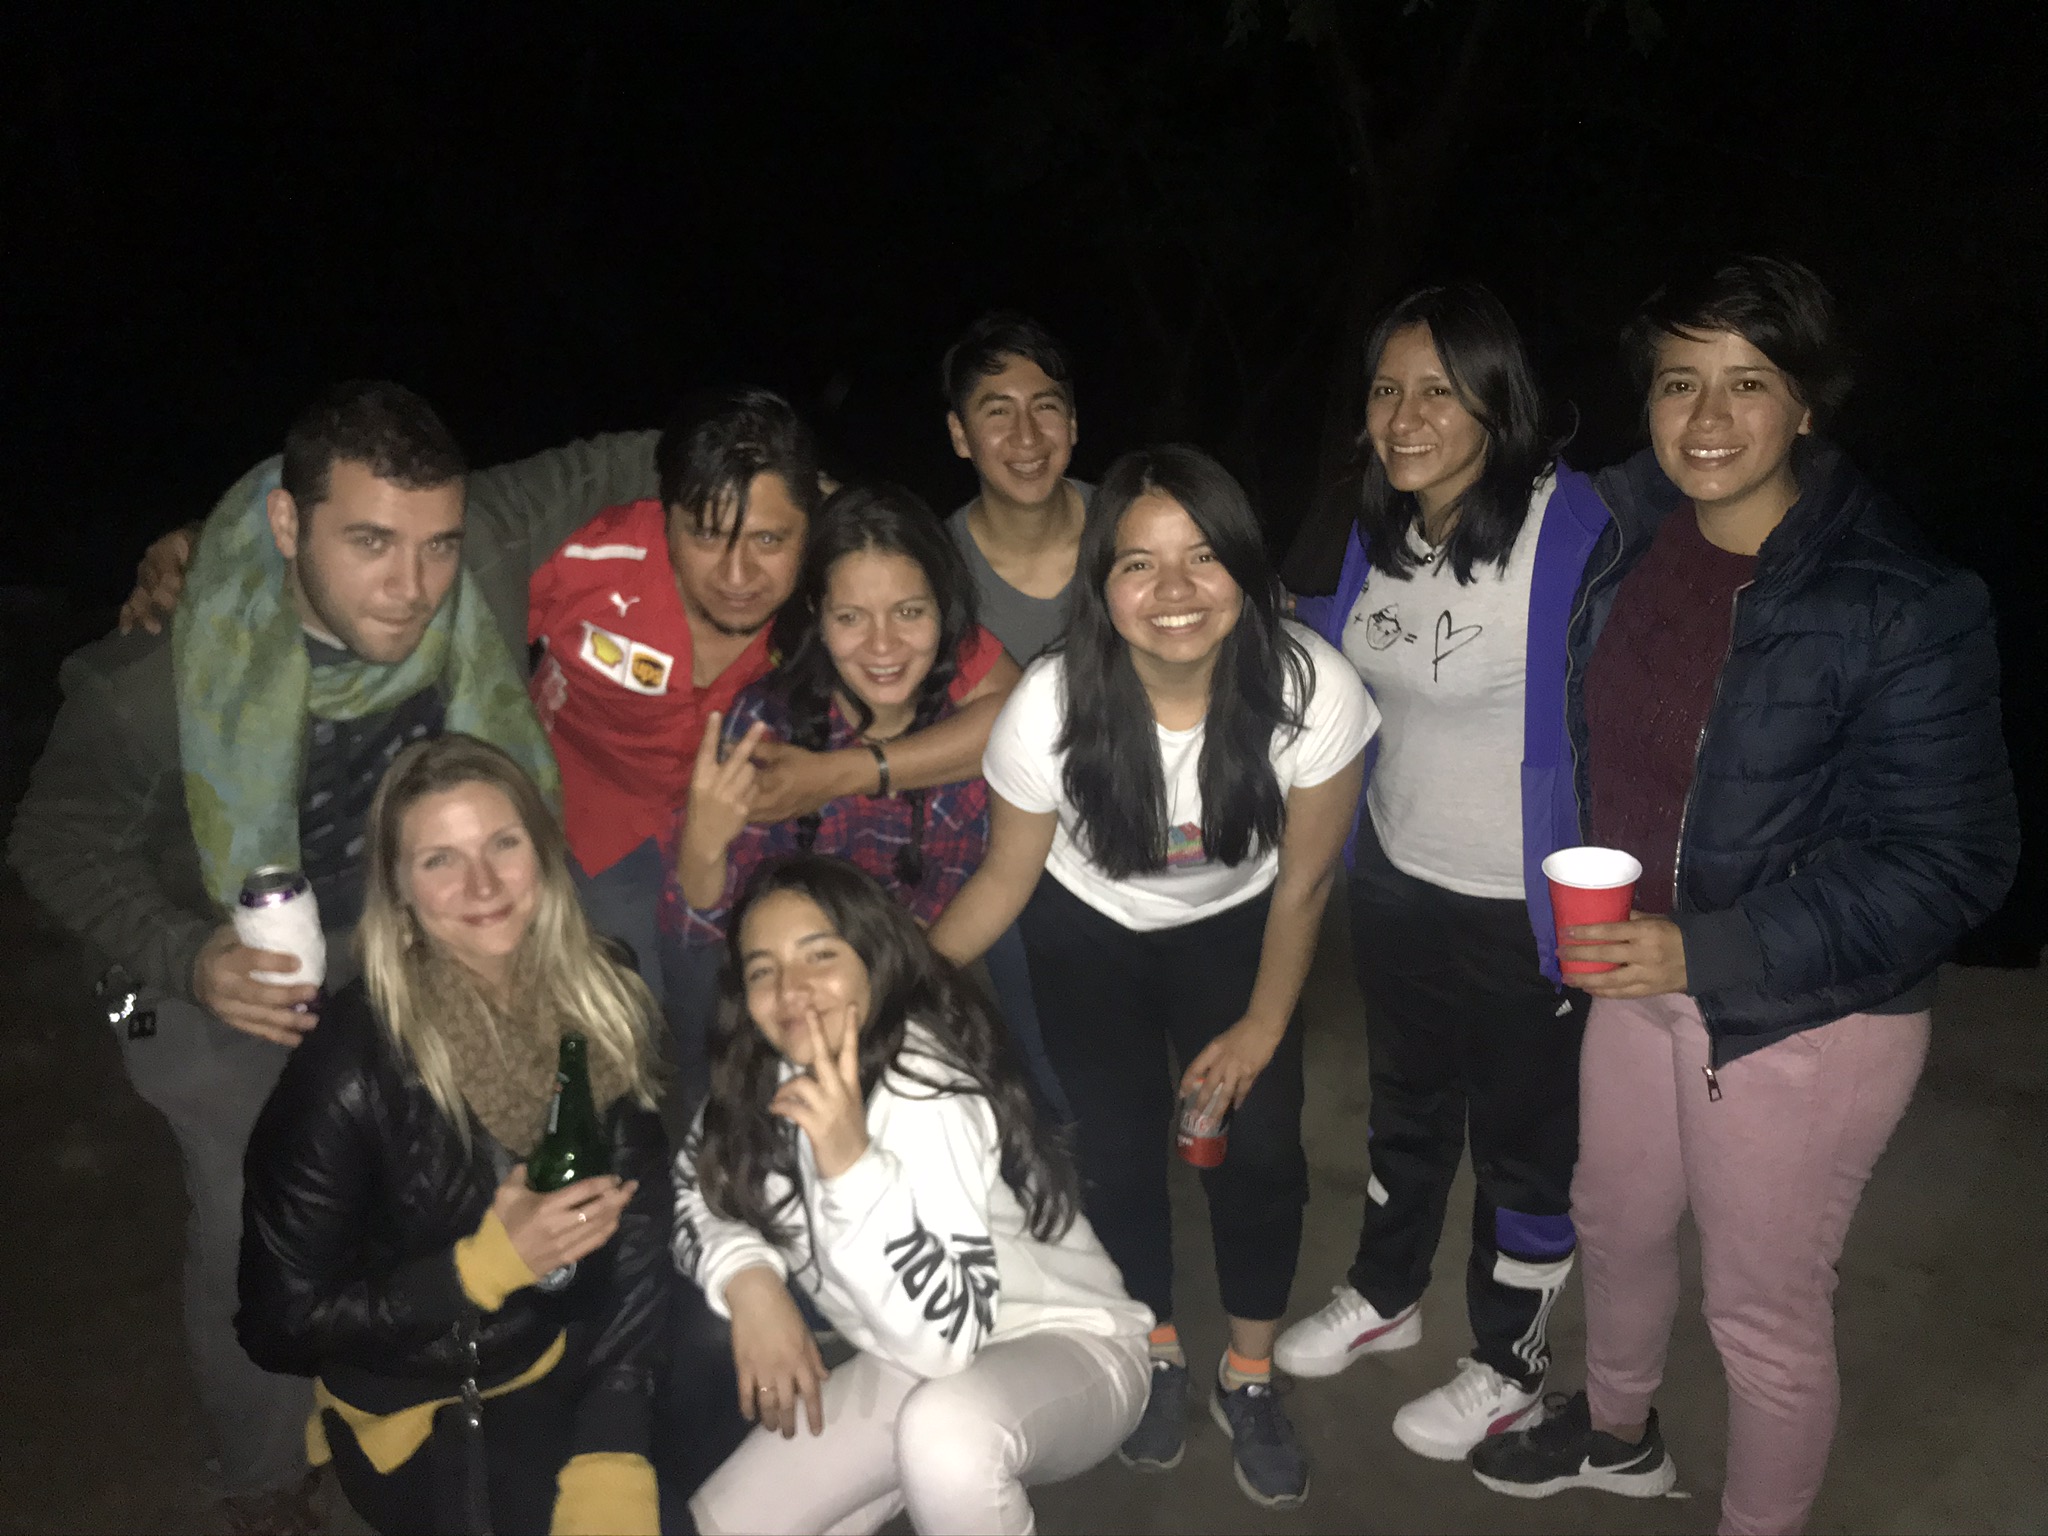 friends, camping, camping in mexico, camping at las grutas tolantongo, drinking, party, mexico